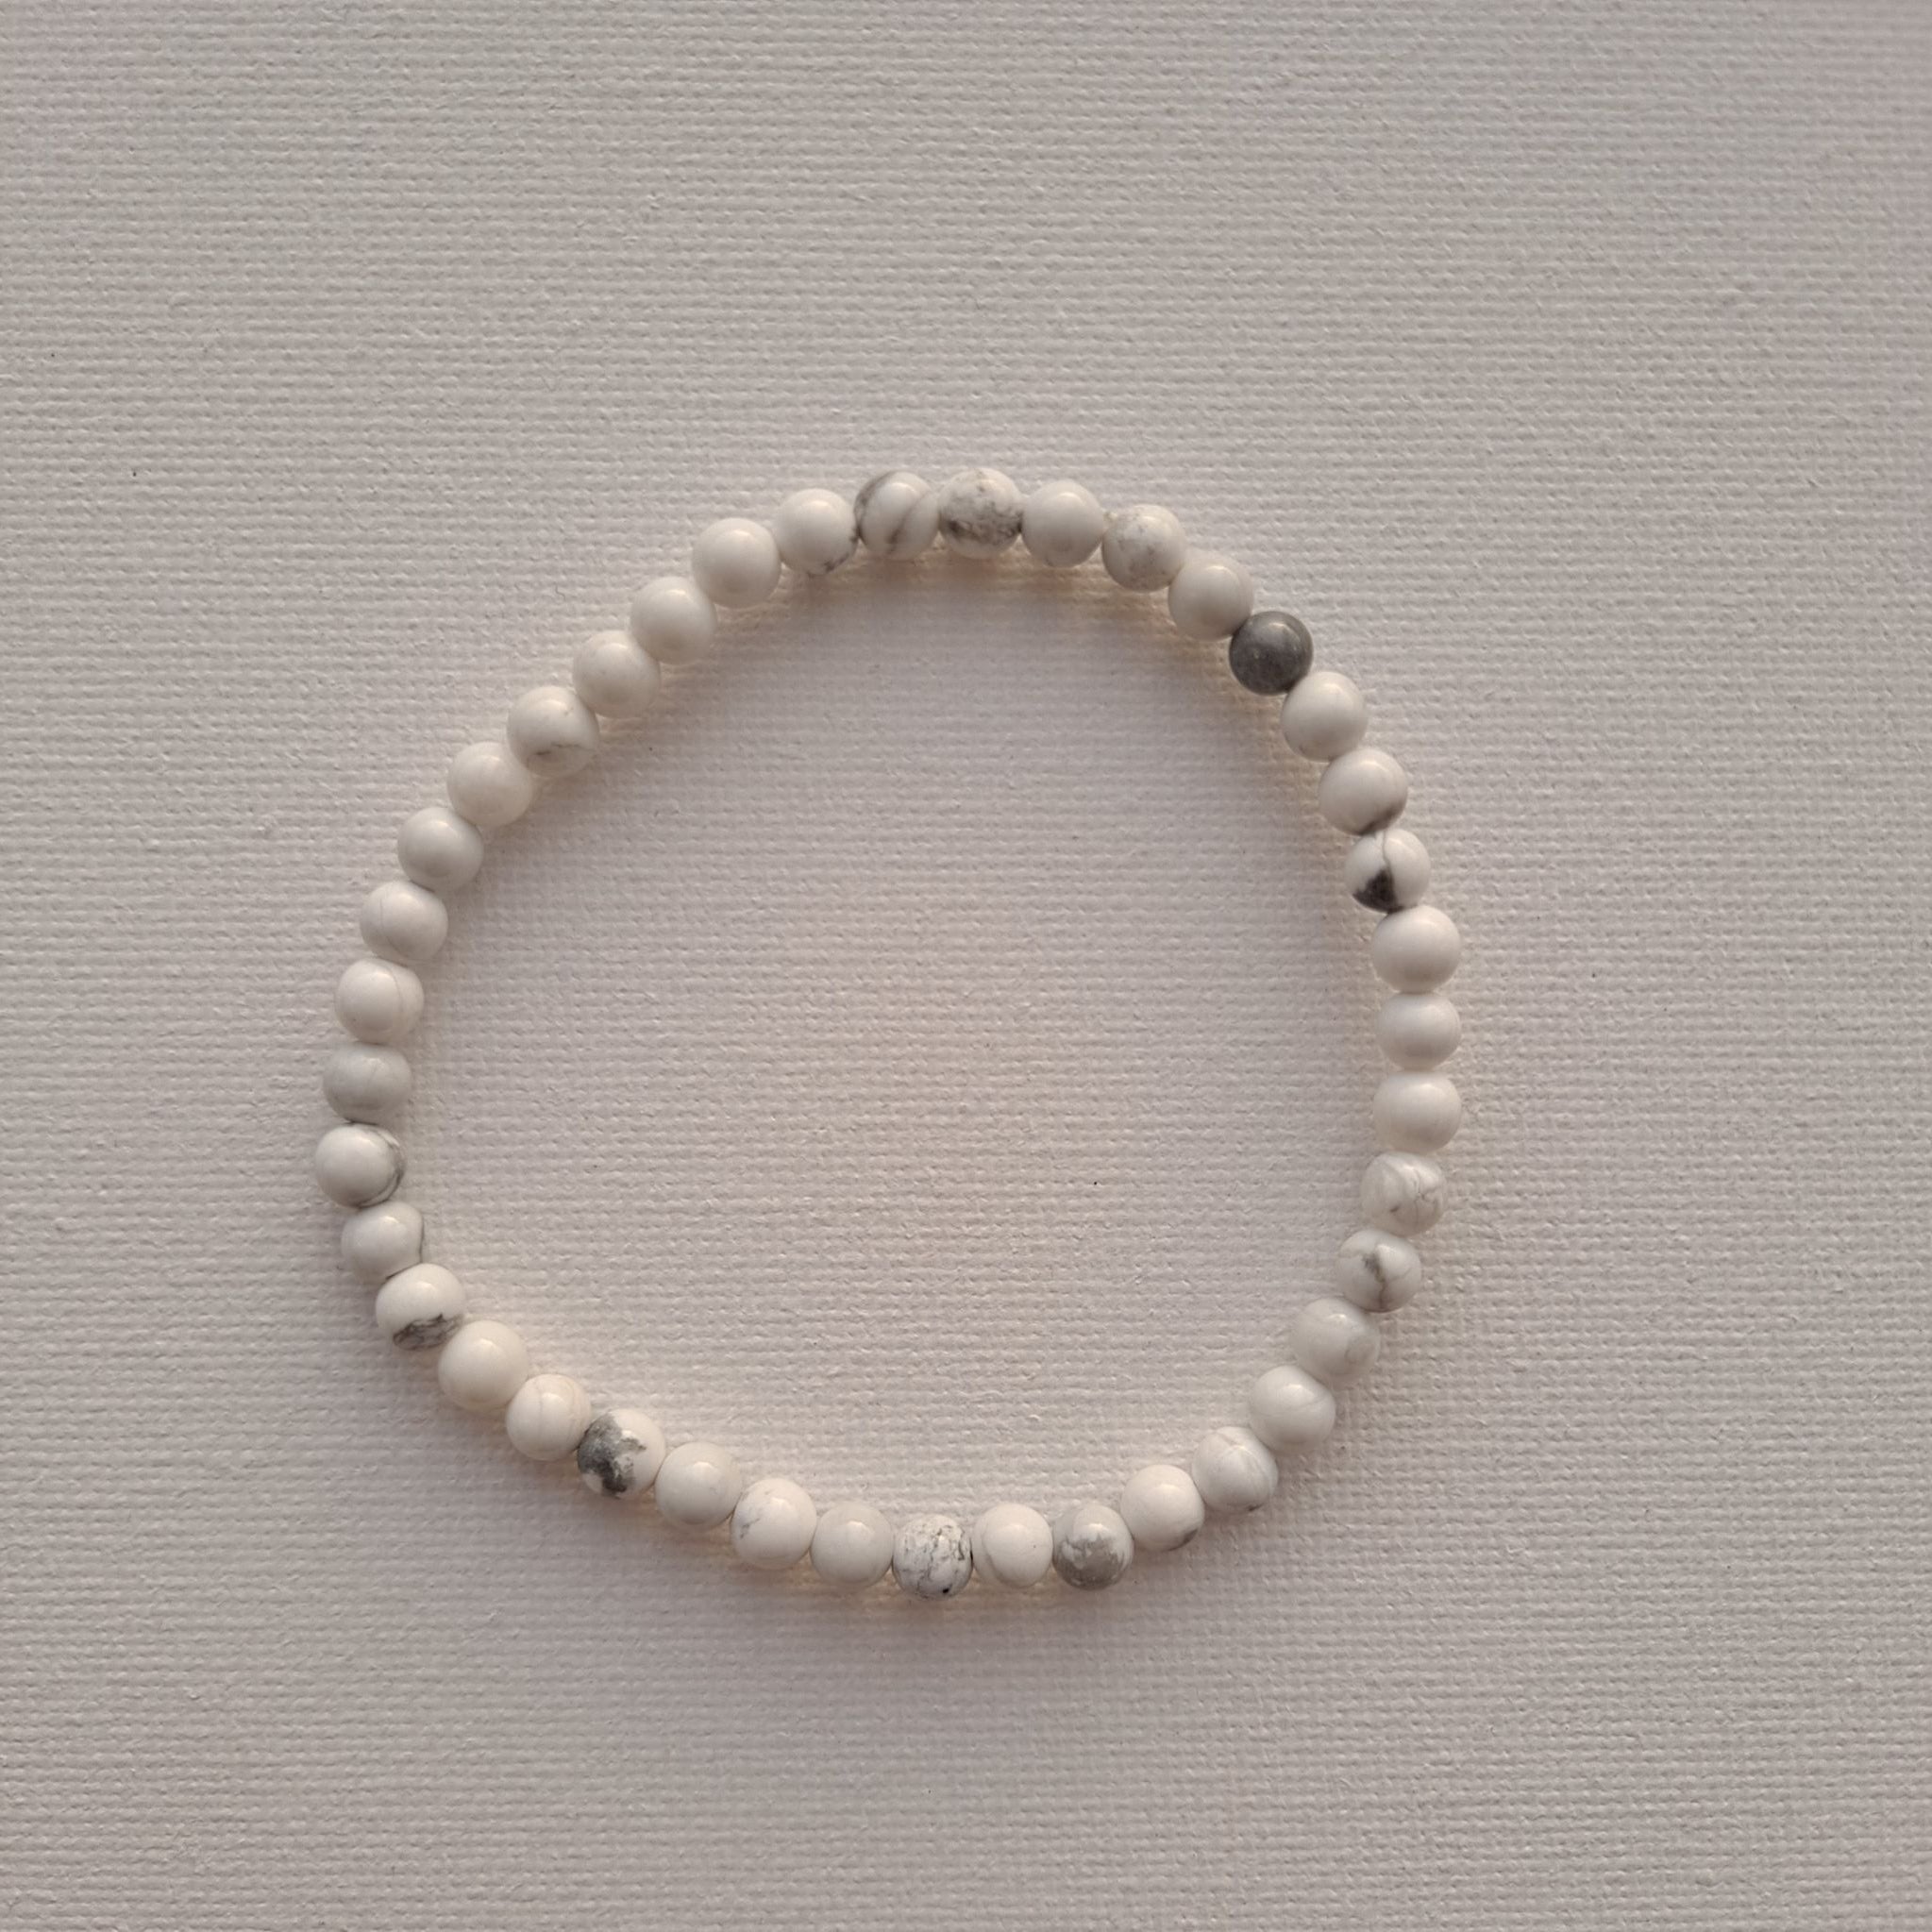 howlite bead bracelet dumiscrystals